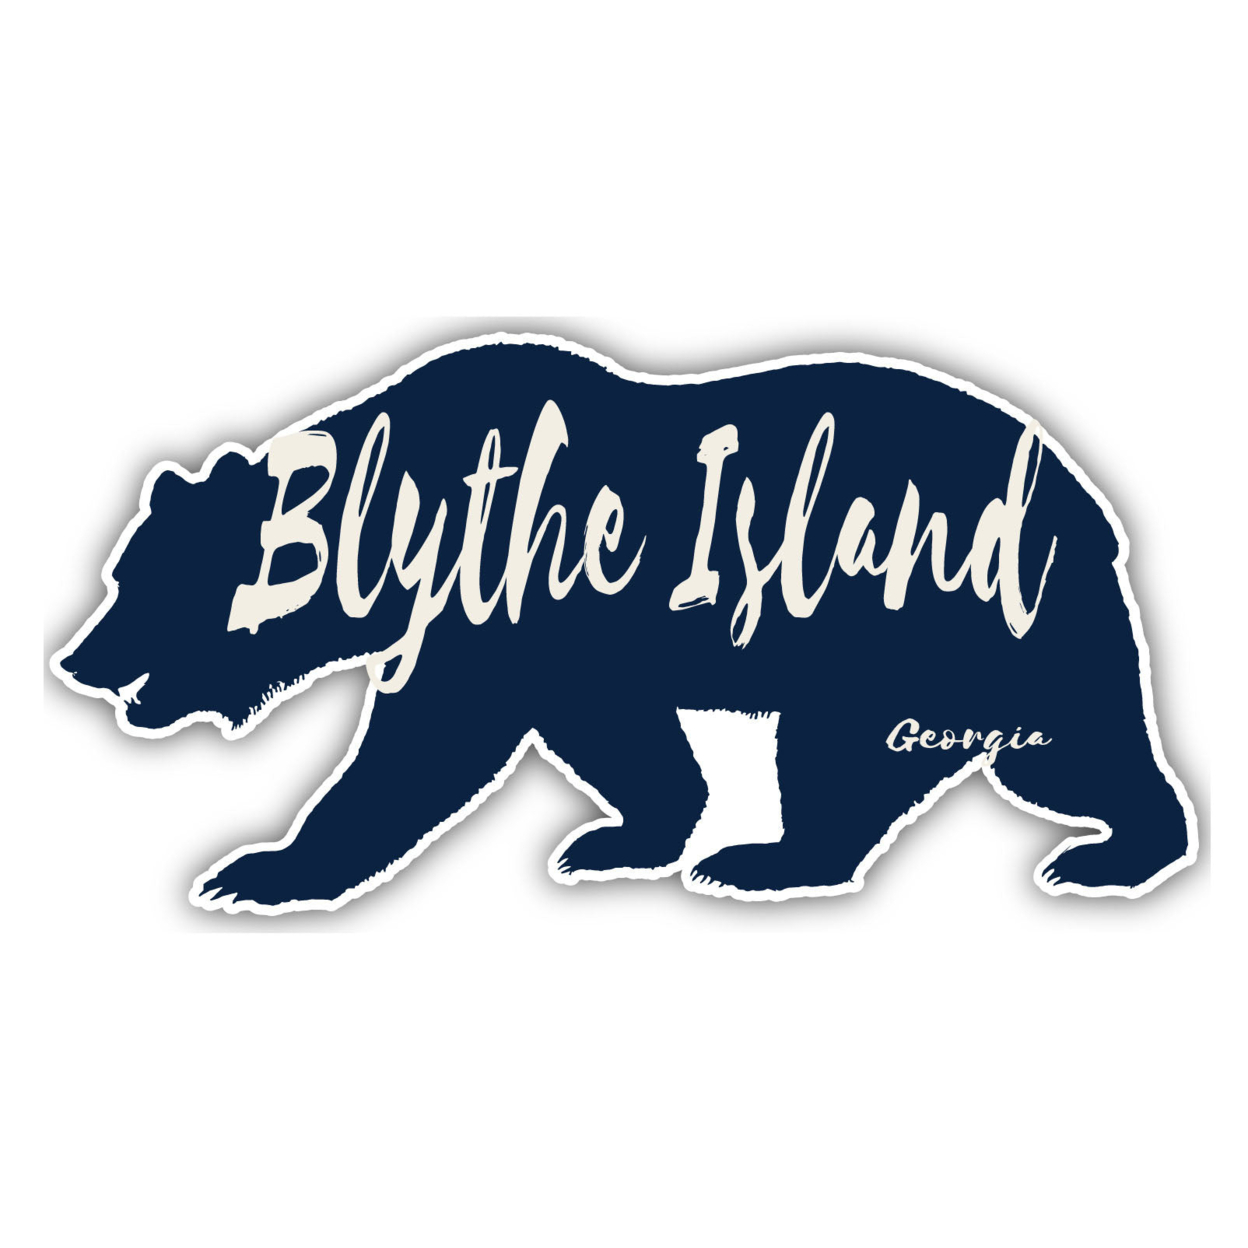 Blythe Island Georgia Souvenir Decorative Stickers (Choose Theme And Size) - Single Unit, 12-Inch, Camp Life